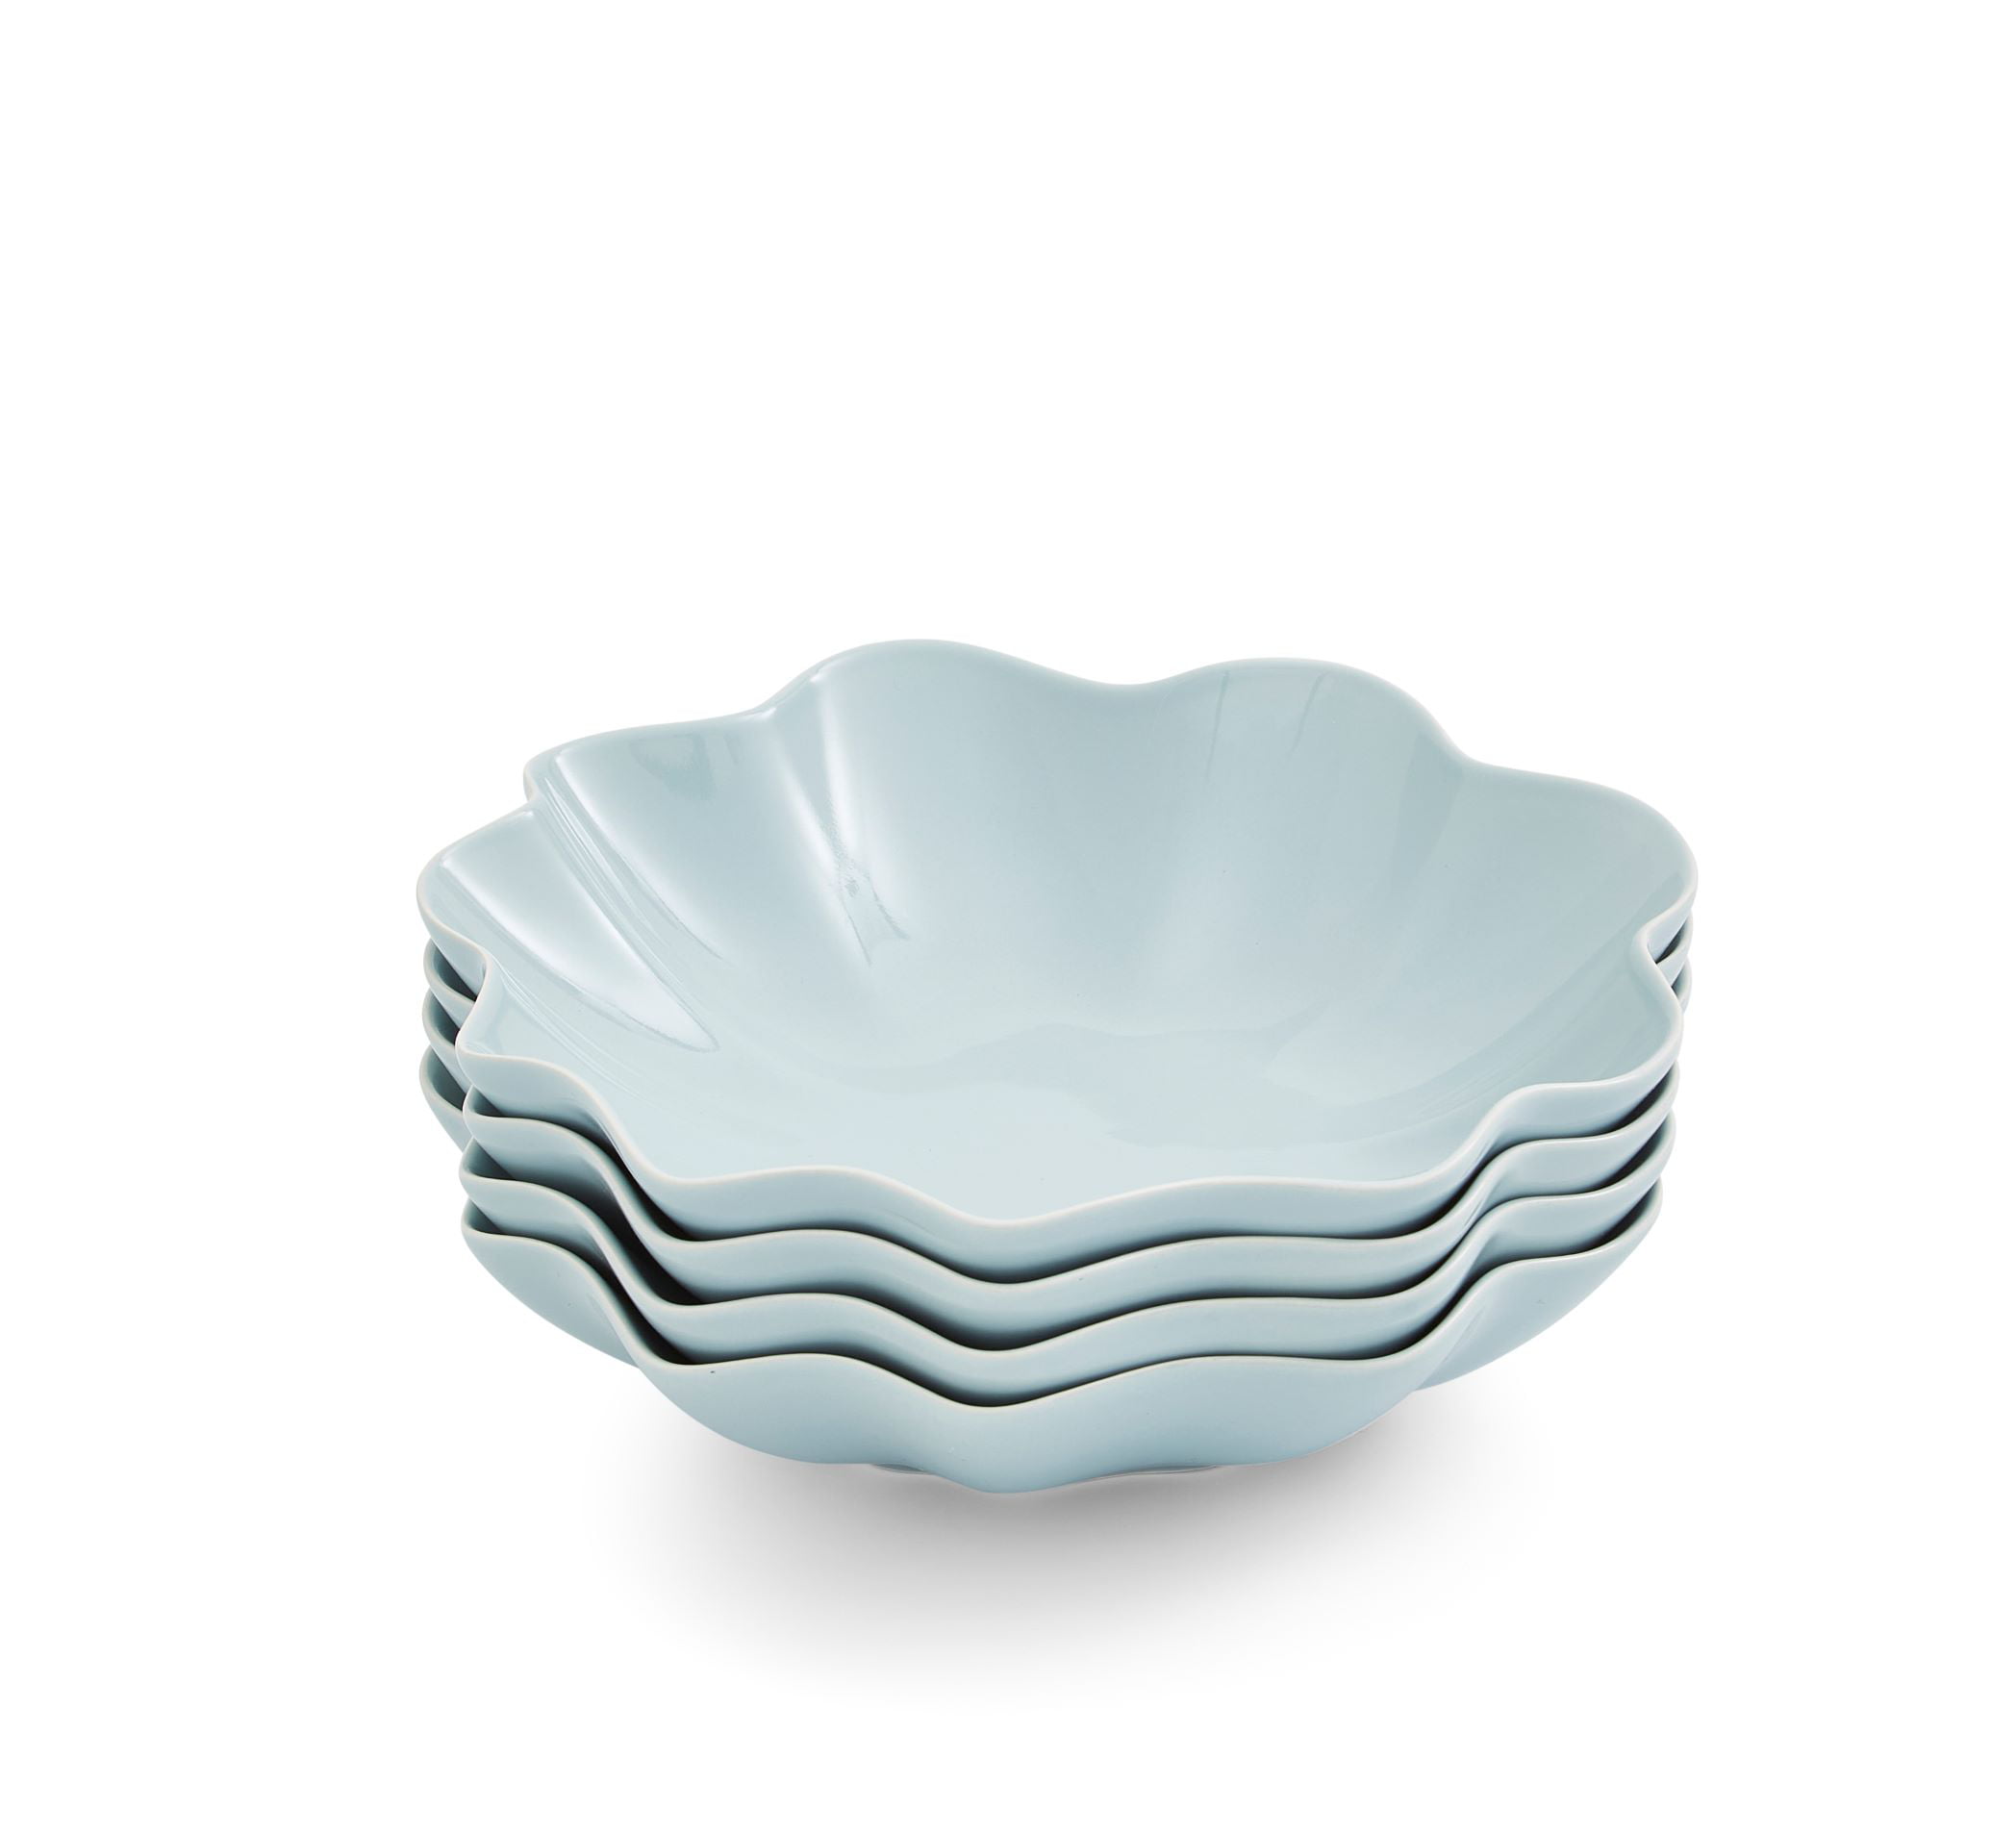 Details about   Portmeirion Sophie Conran All Purpose Floret Design Bowl Set of 4 Creamy White 